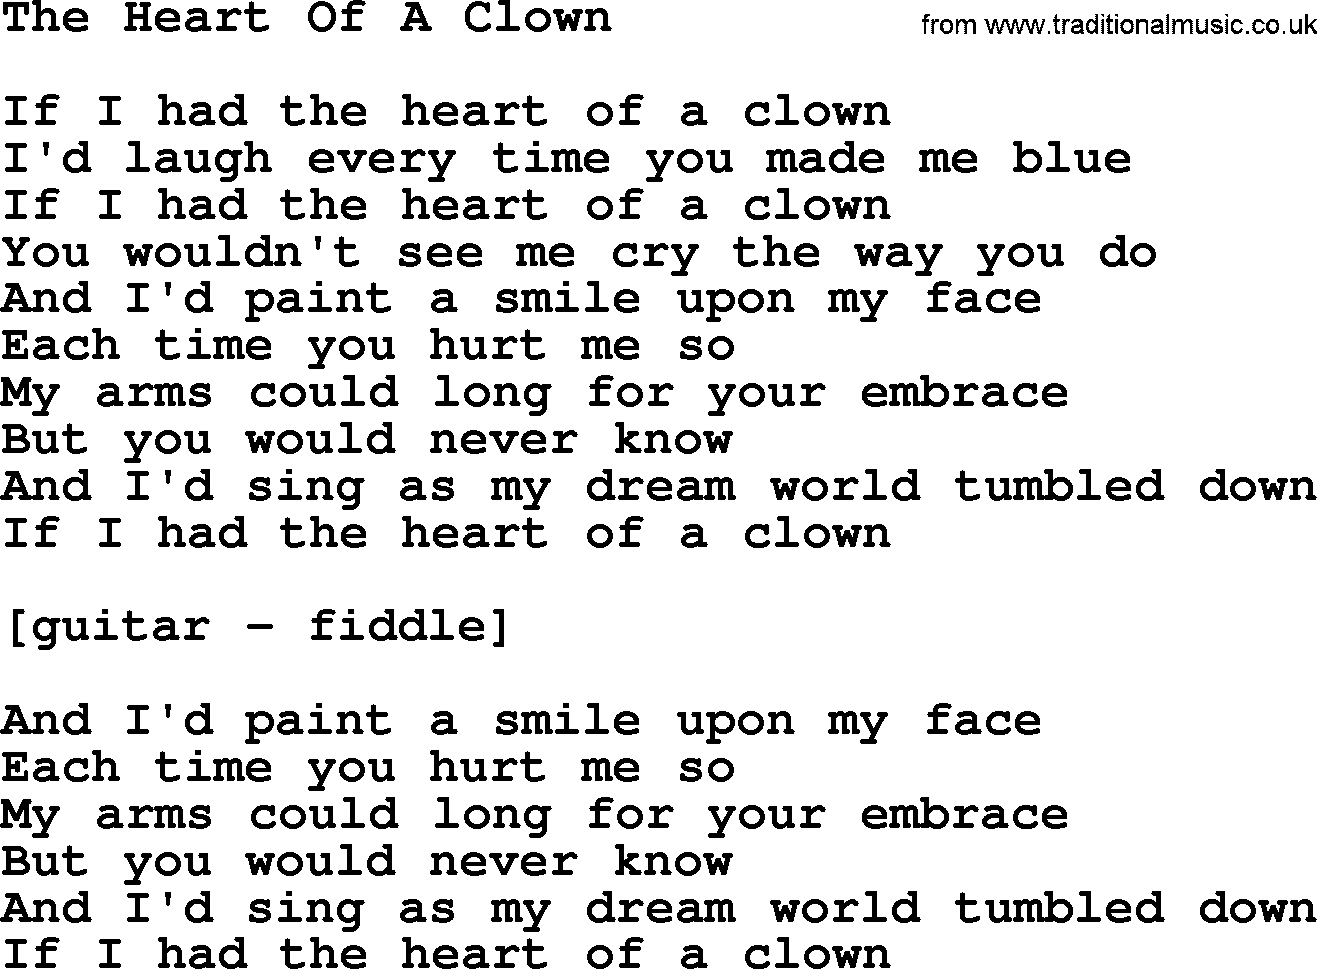 Willie Nelson song: The Heart Of A Clown lyrics